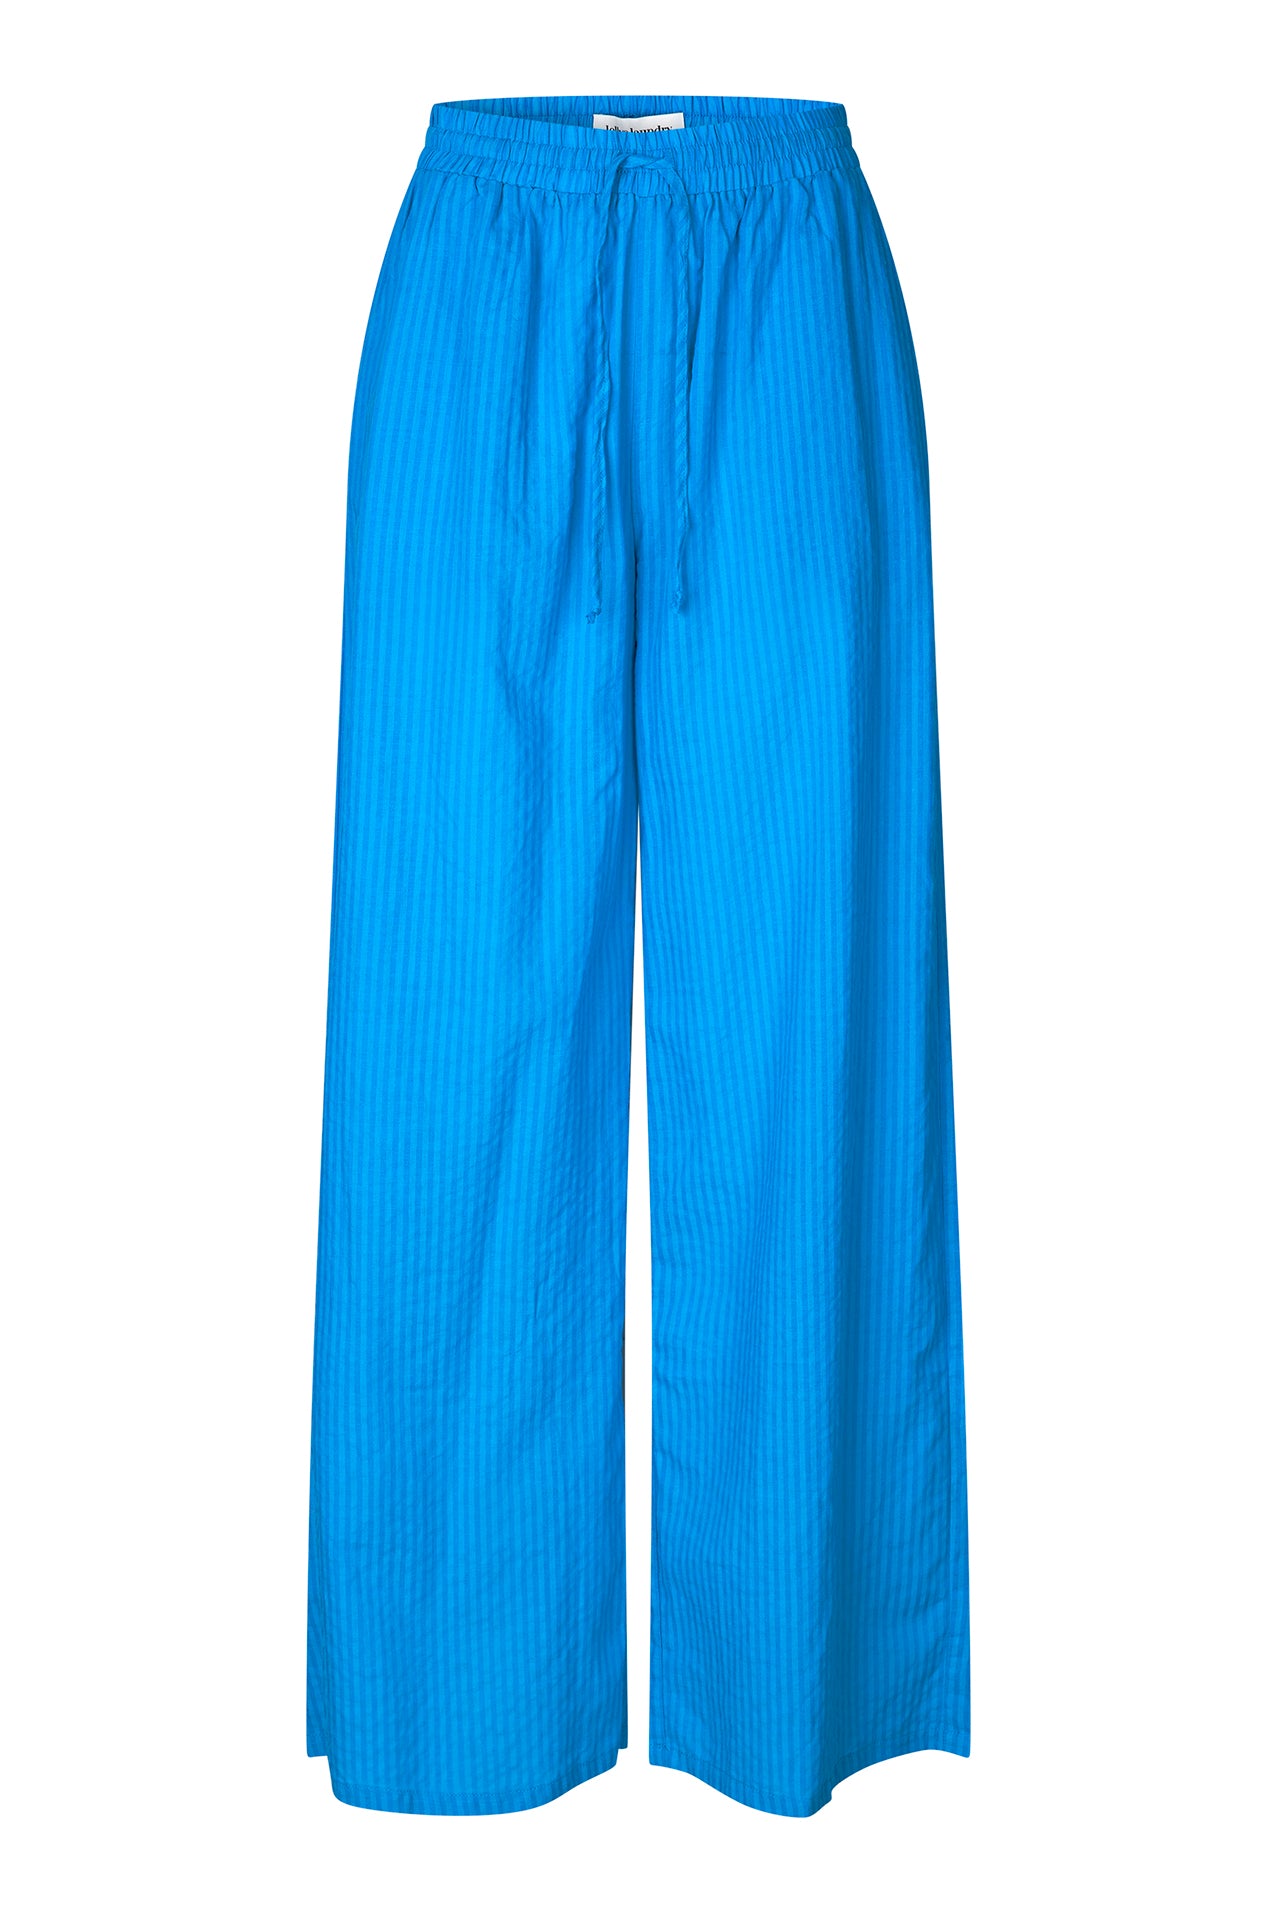 Lollys Laundry RitaLL Pants Pants 20 Blue